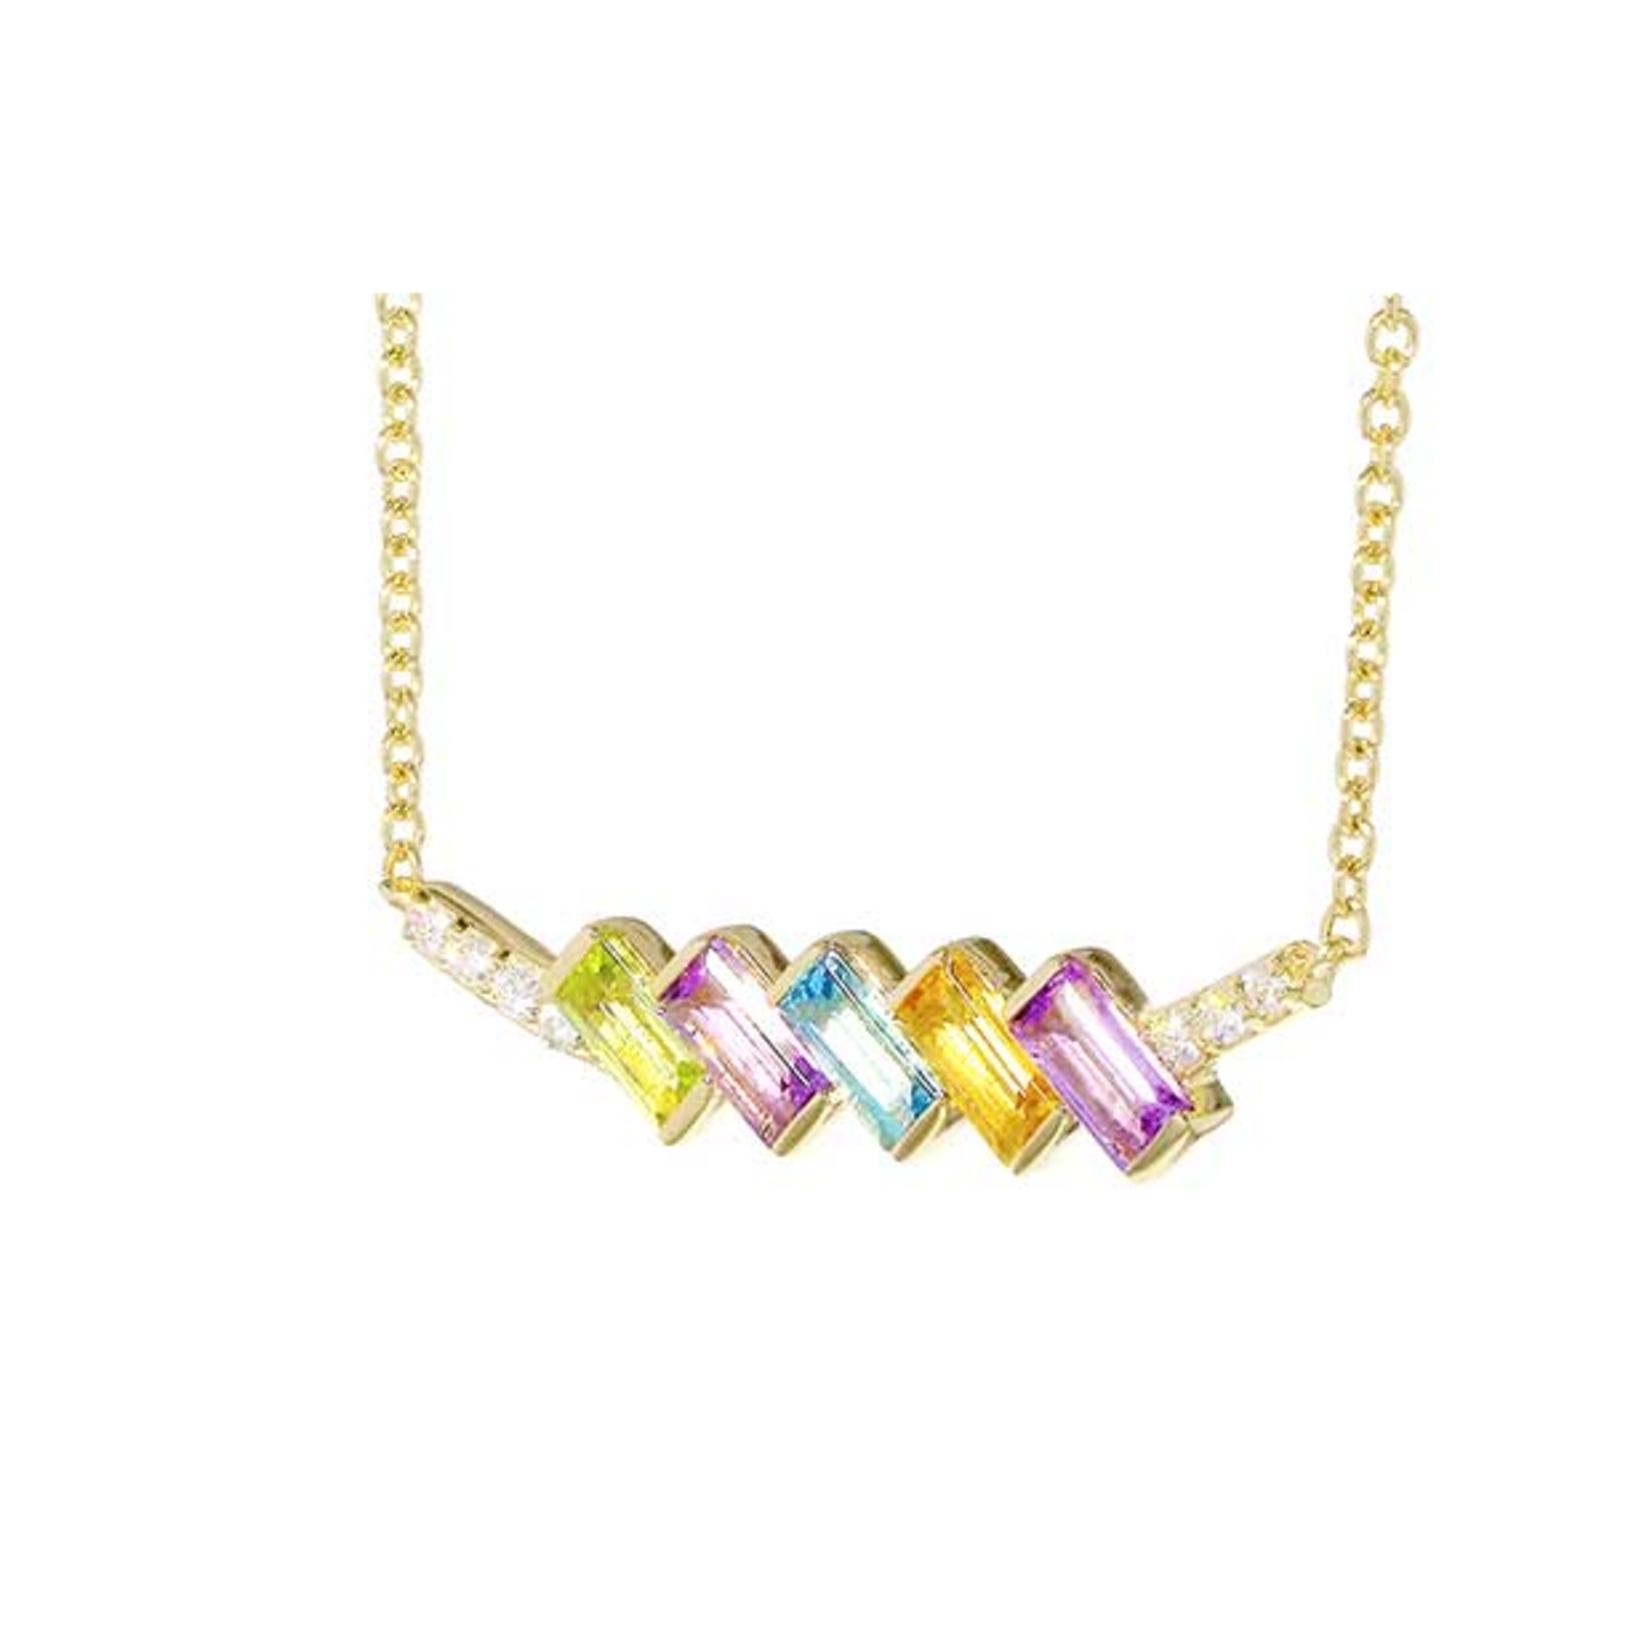 ALLISON-KAUFMAN COMPANY 14KY Gemstone and Diamond Necklace